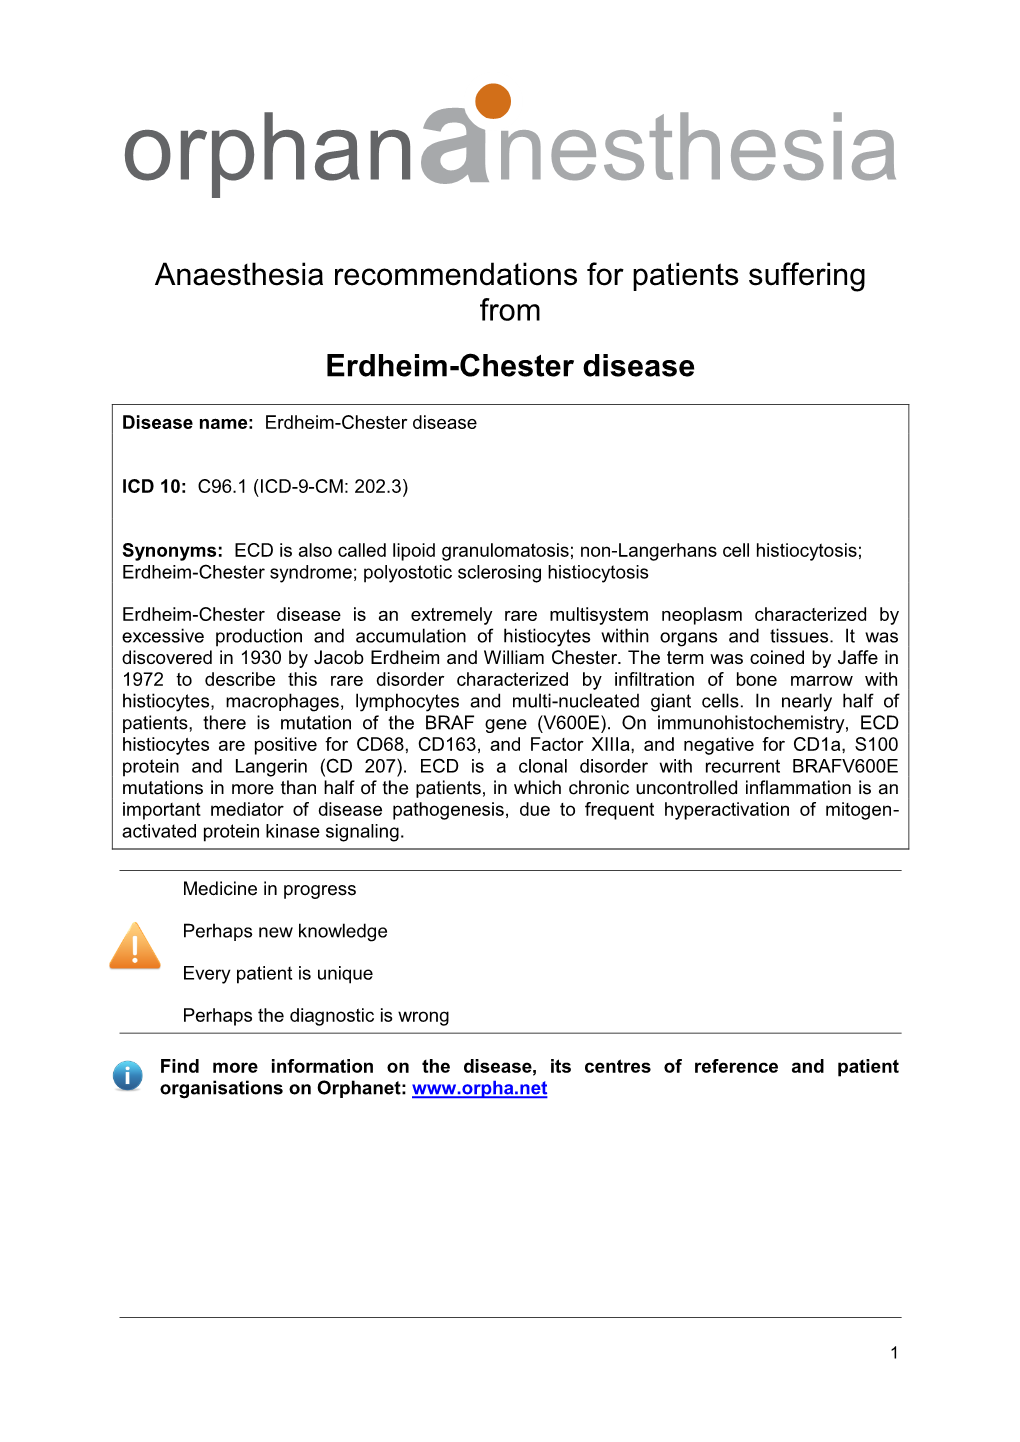 Erdheim-Chester Disease